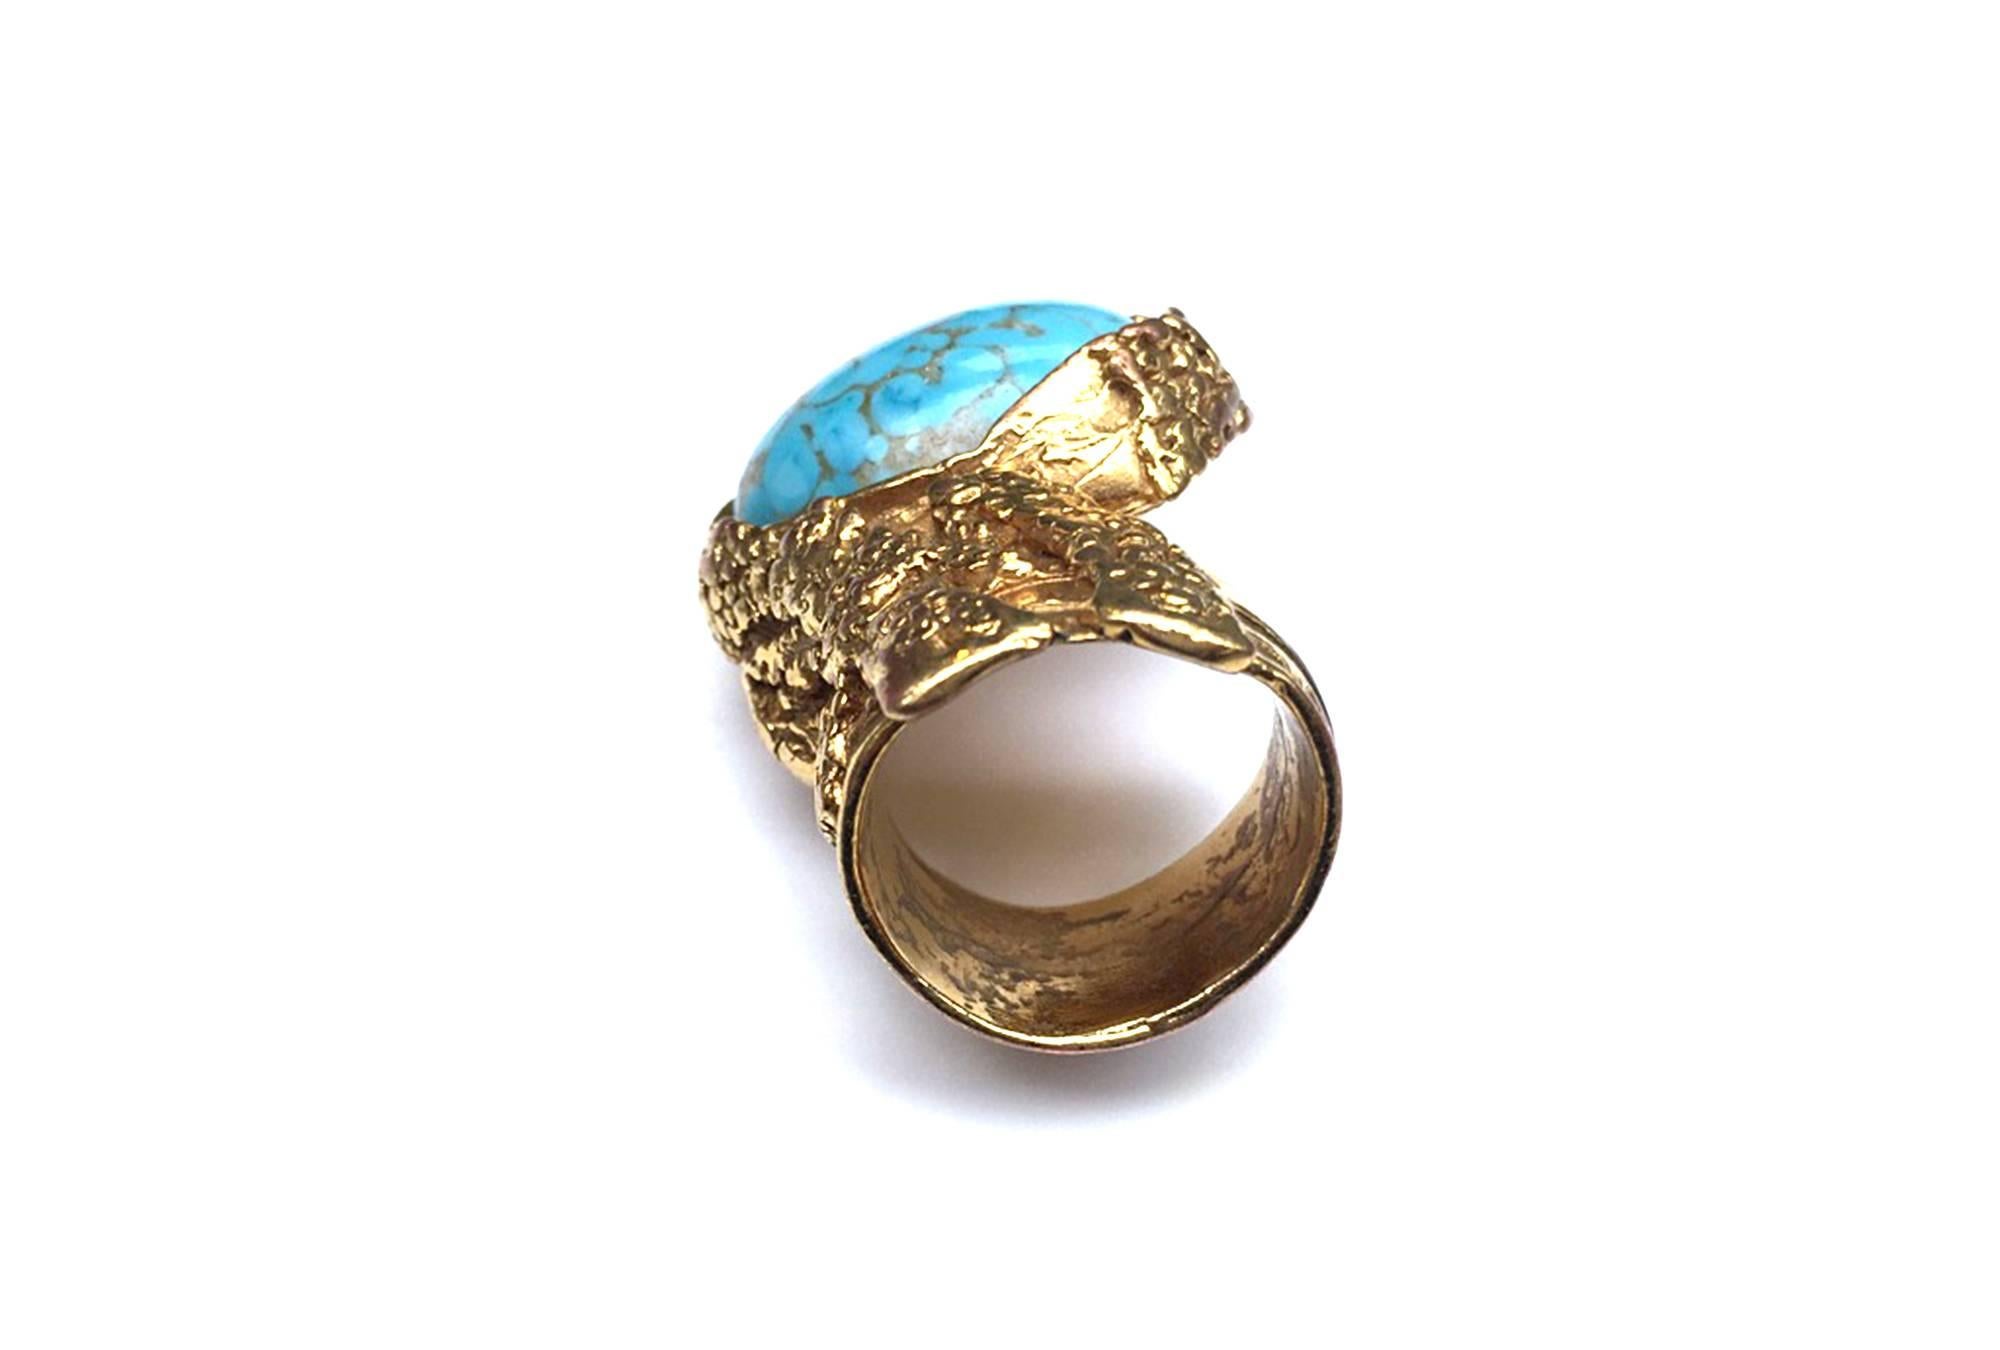 Yves Saint Laurent by Stefano Pilati gold ring w. turquios stone, Sz 9 1